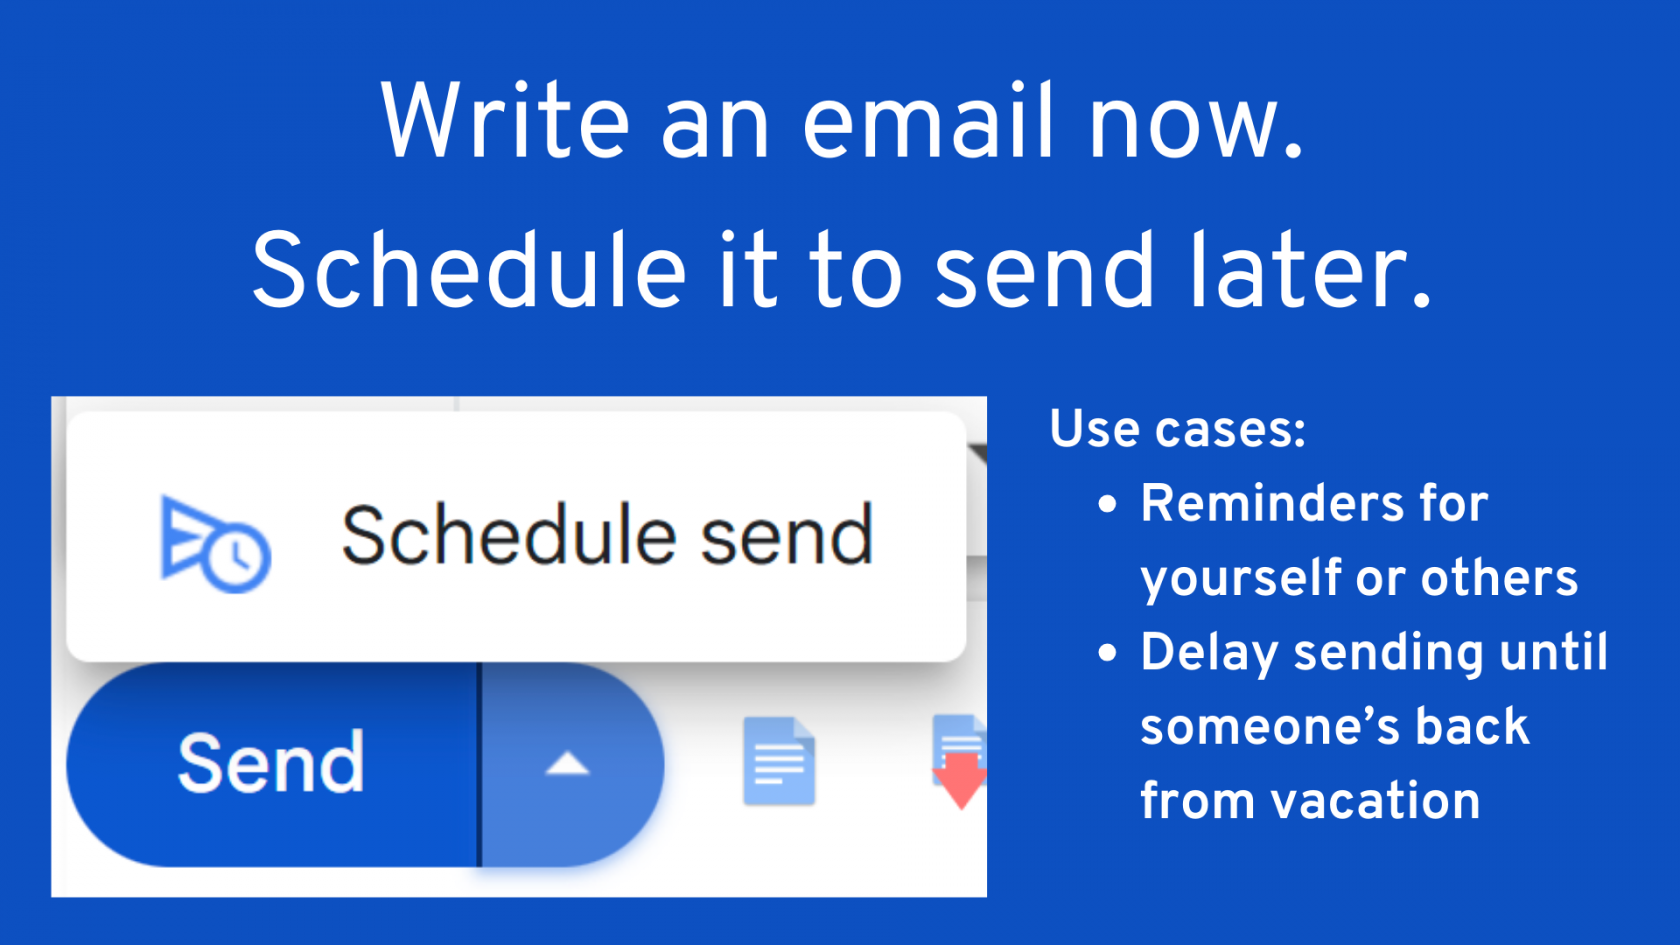 gmail-schedule-send